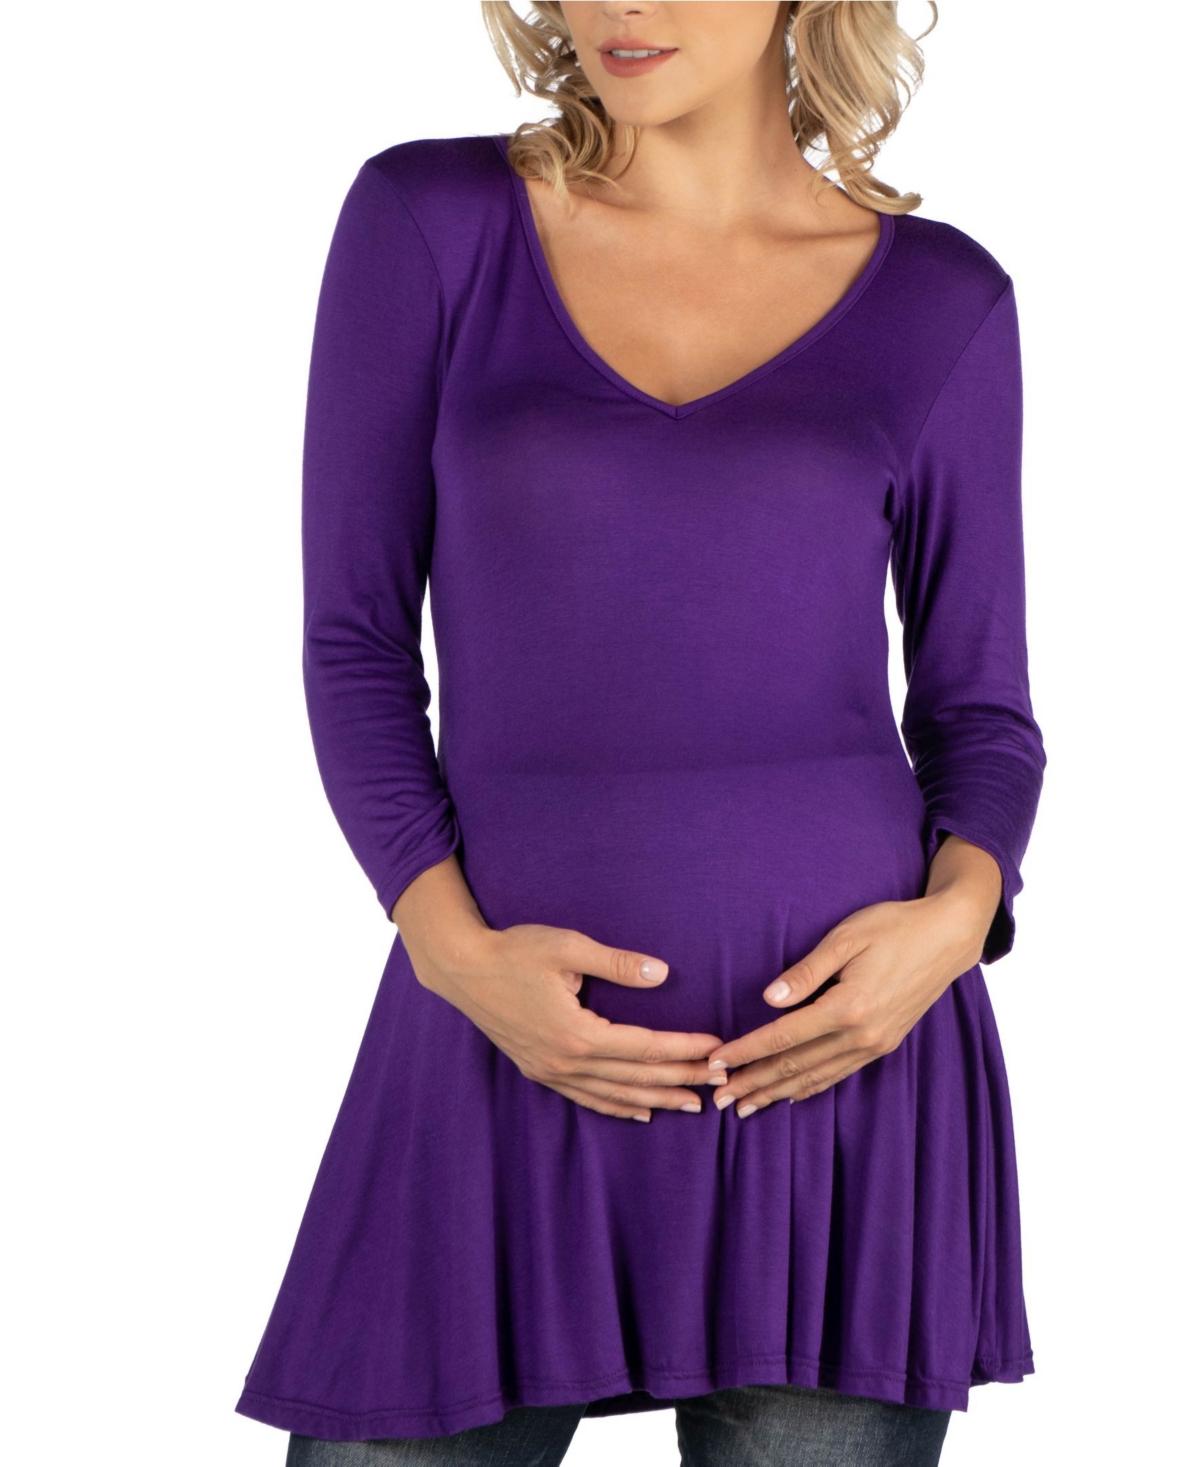  24Seven Comfort Apparel Three Quarter Sleeve V-Neck Maternity Tunic Top